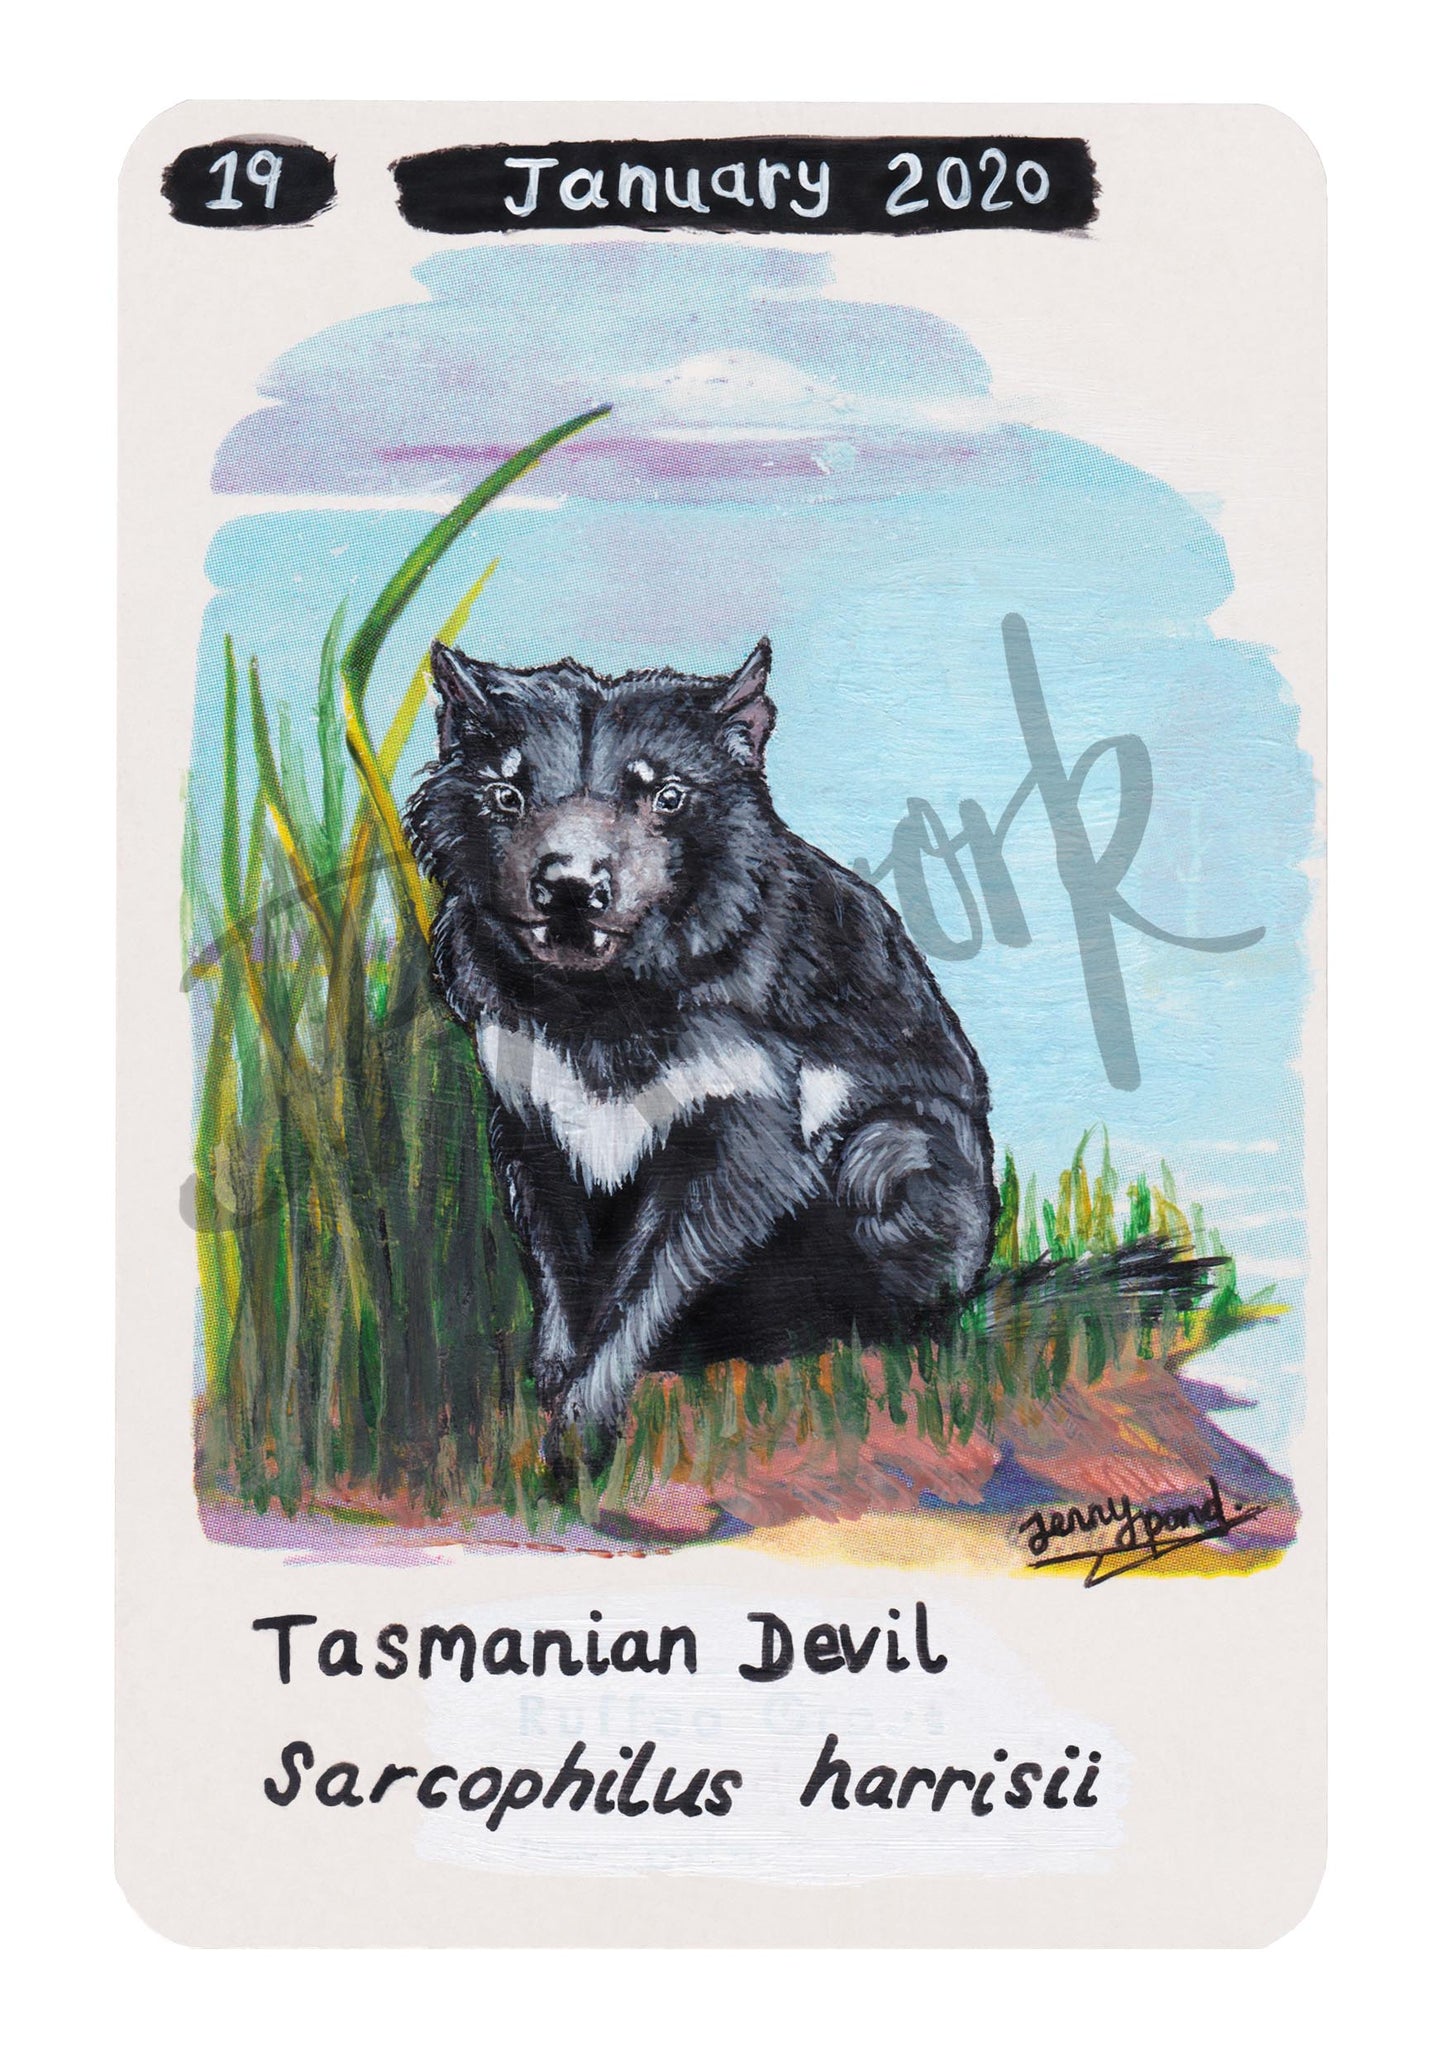 Tasmanian Devil Limited Edition A5 Hemp Paper Print by Jenny Pond, JPArtwork